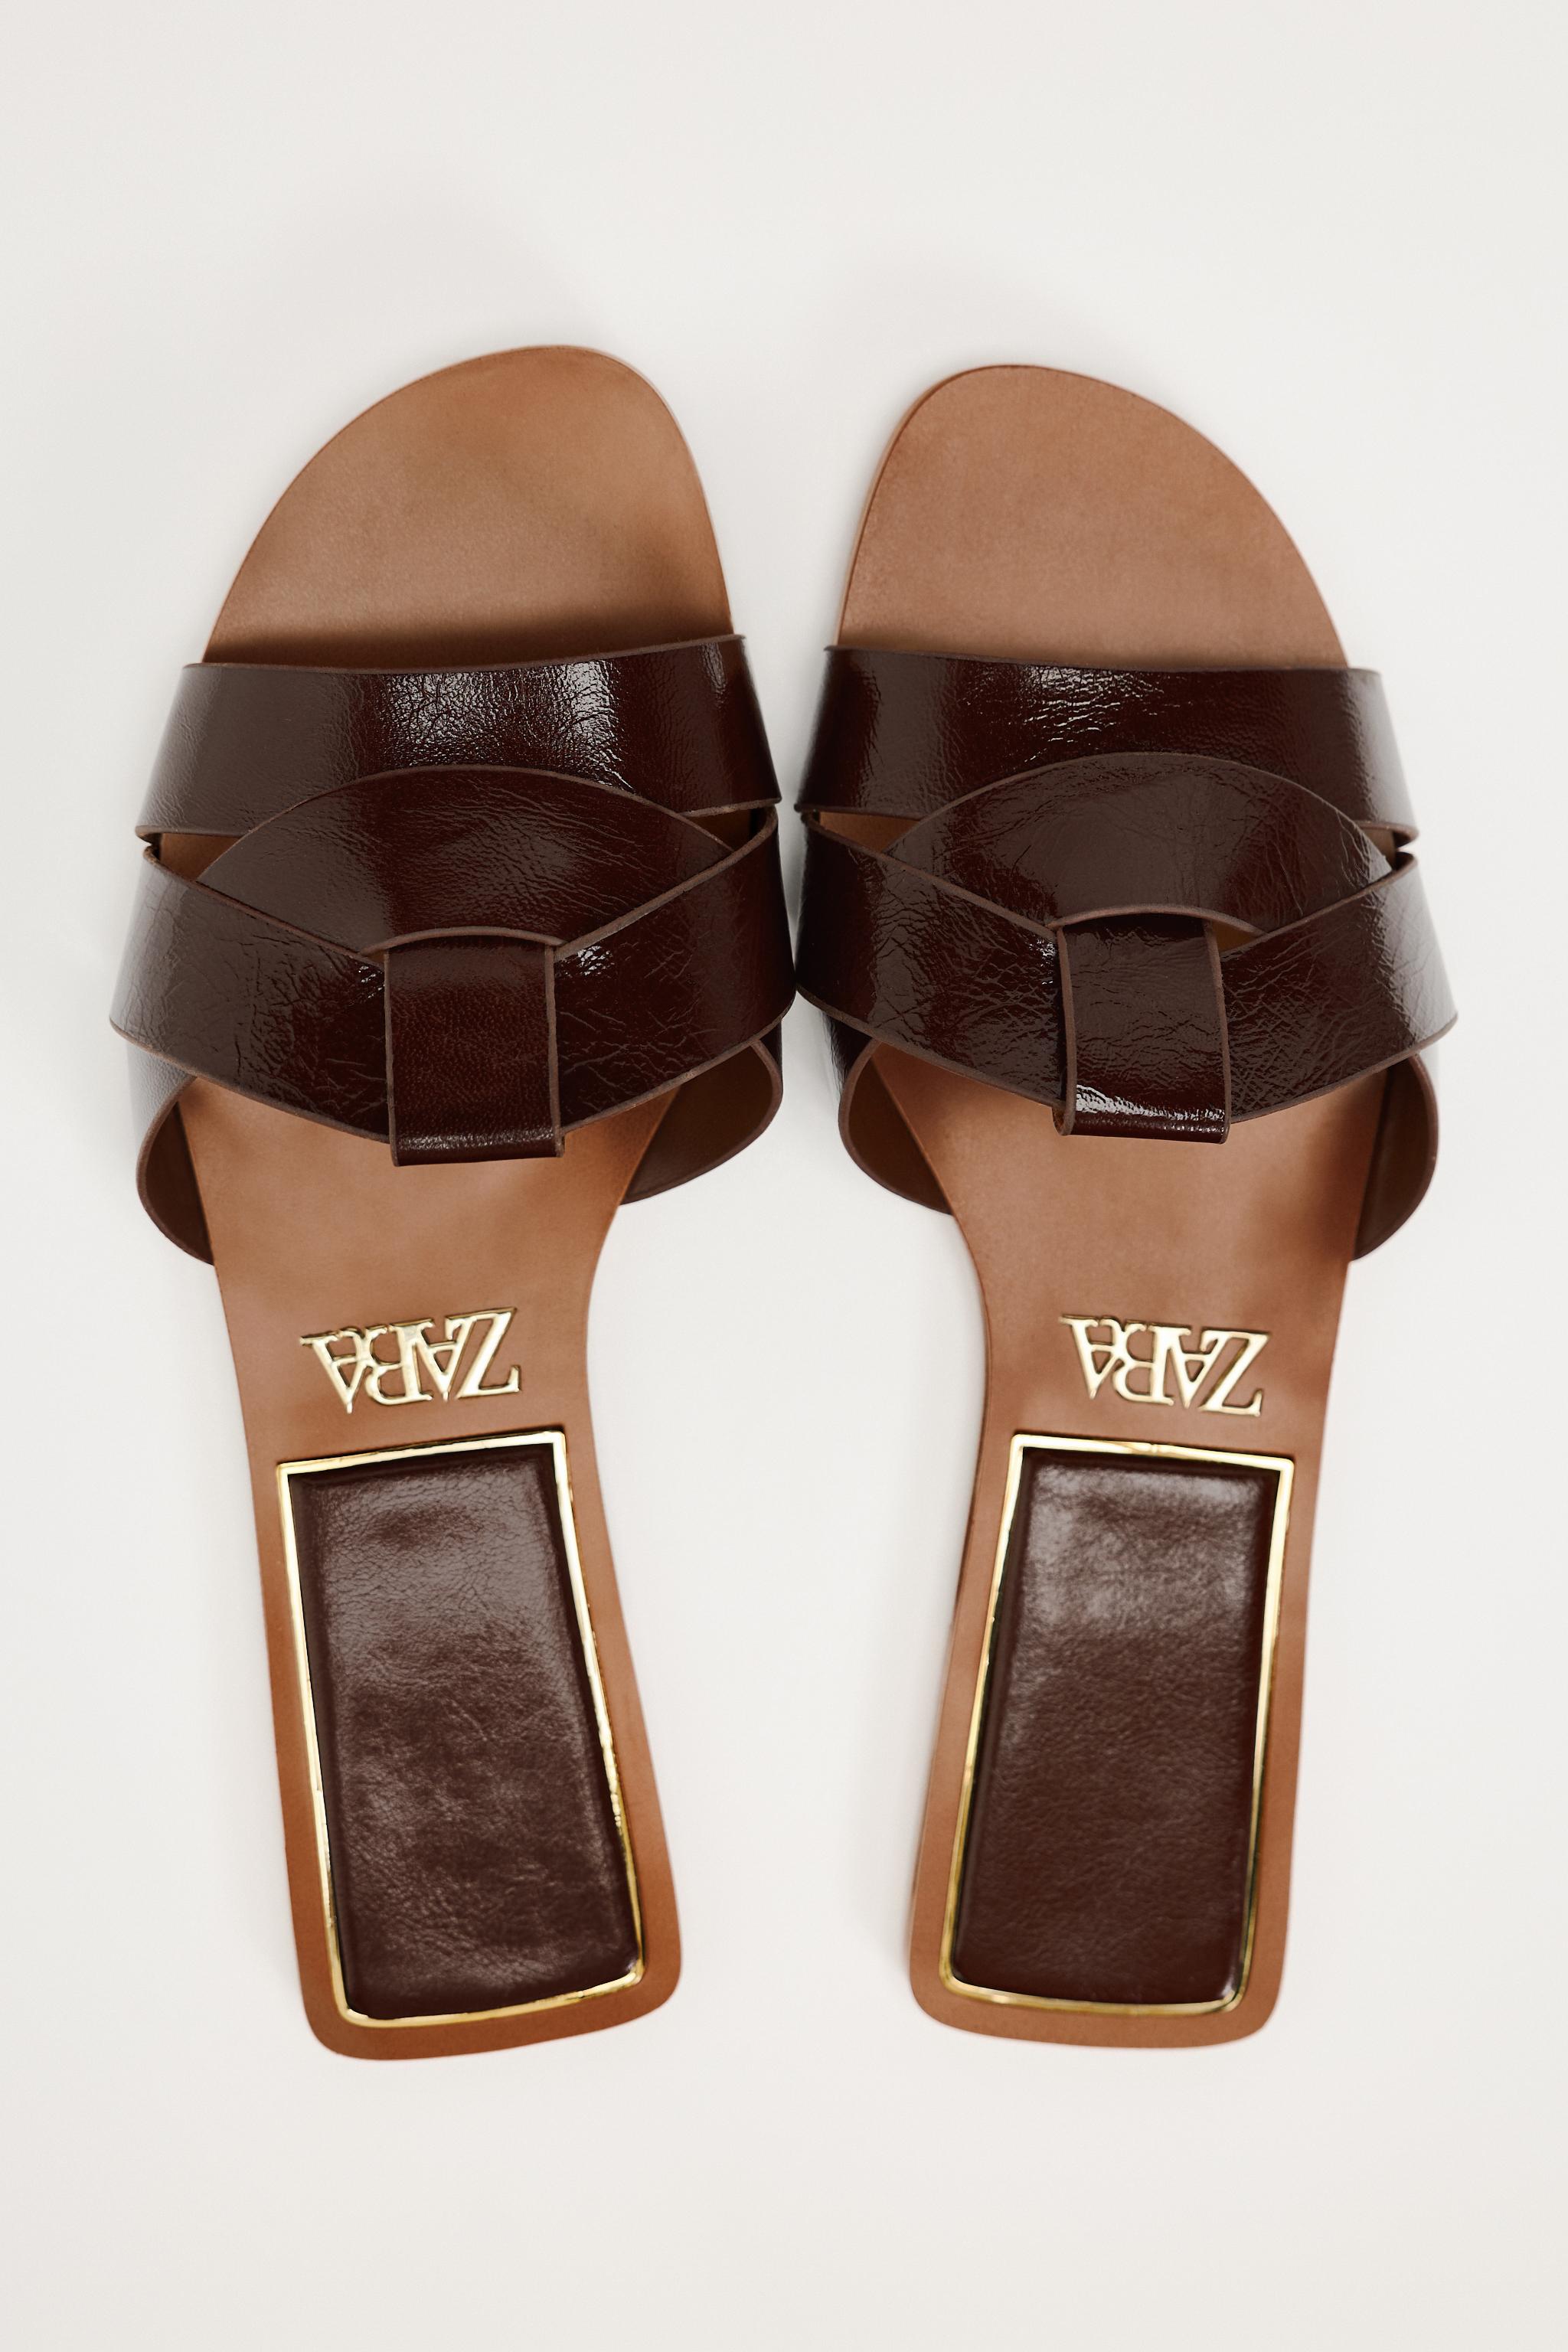  zuwimk Sandals Women Flat Ankle Strap Flip Flops Strappy Open  Toe Flat Sandals Rhinestone Slip On Comfy Sandal A6